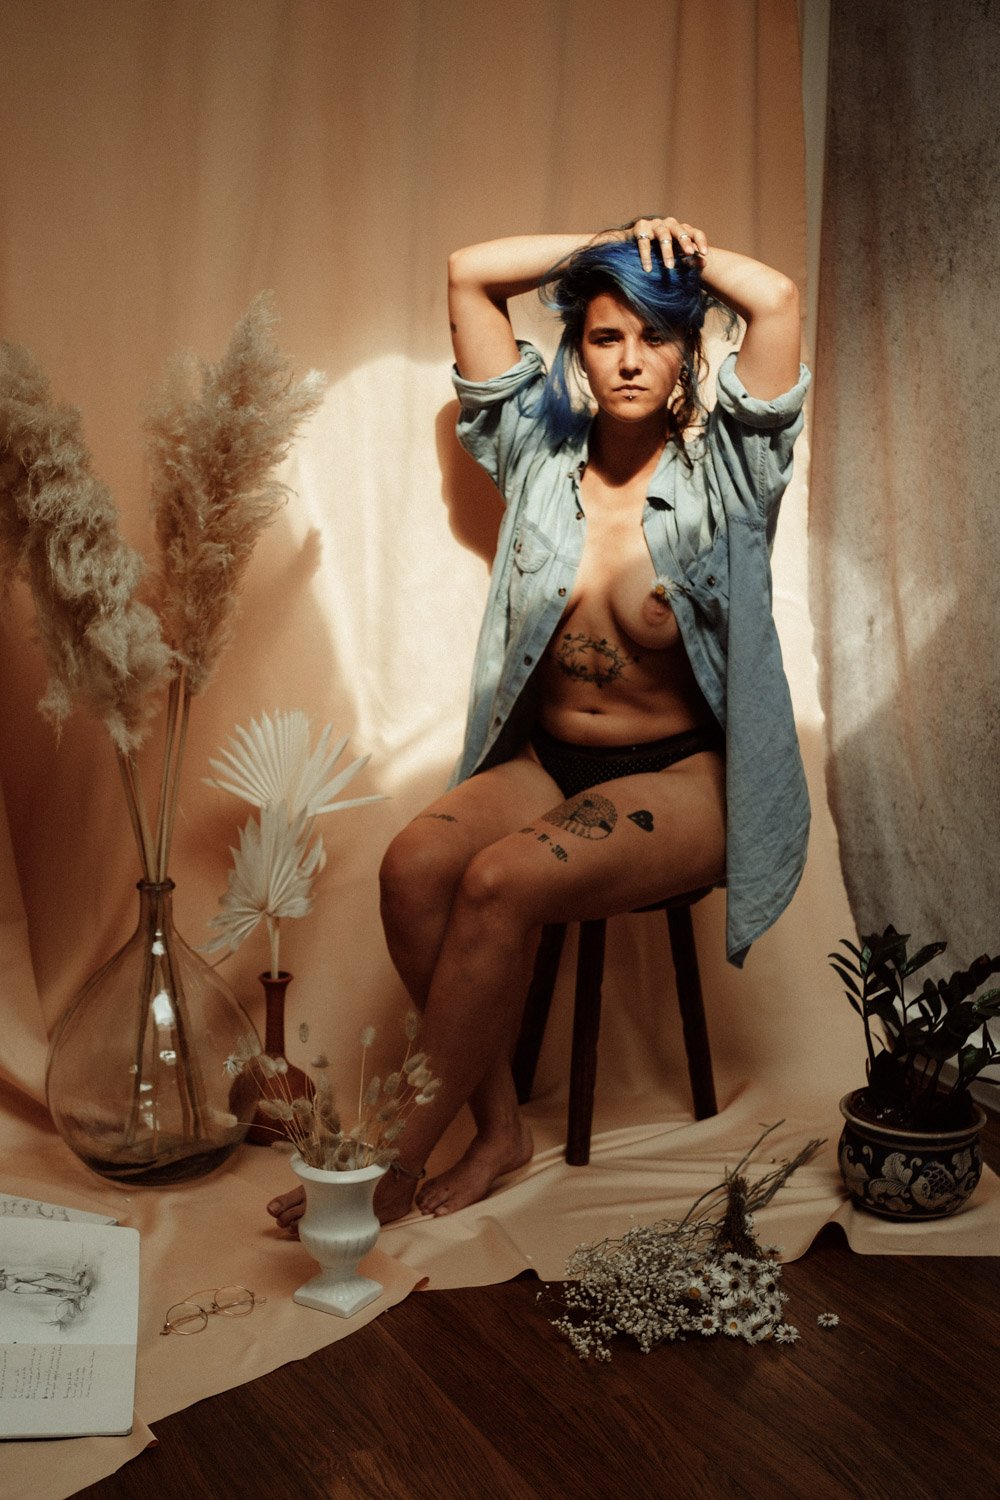 photographe-nantes-therapie-femme-lingerie-lgbt.jpg